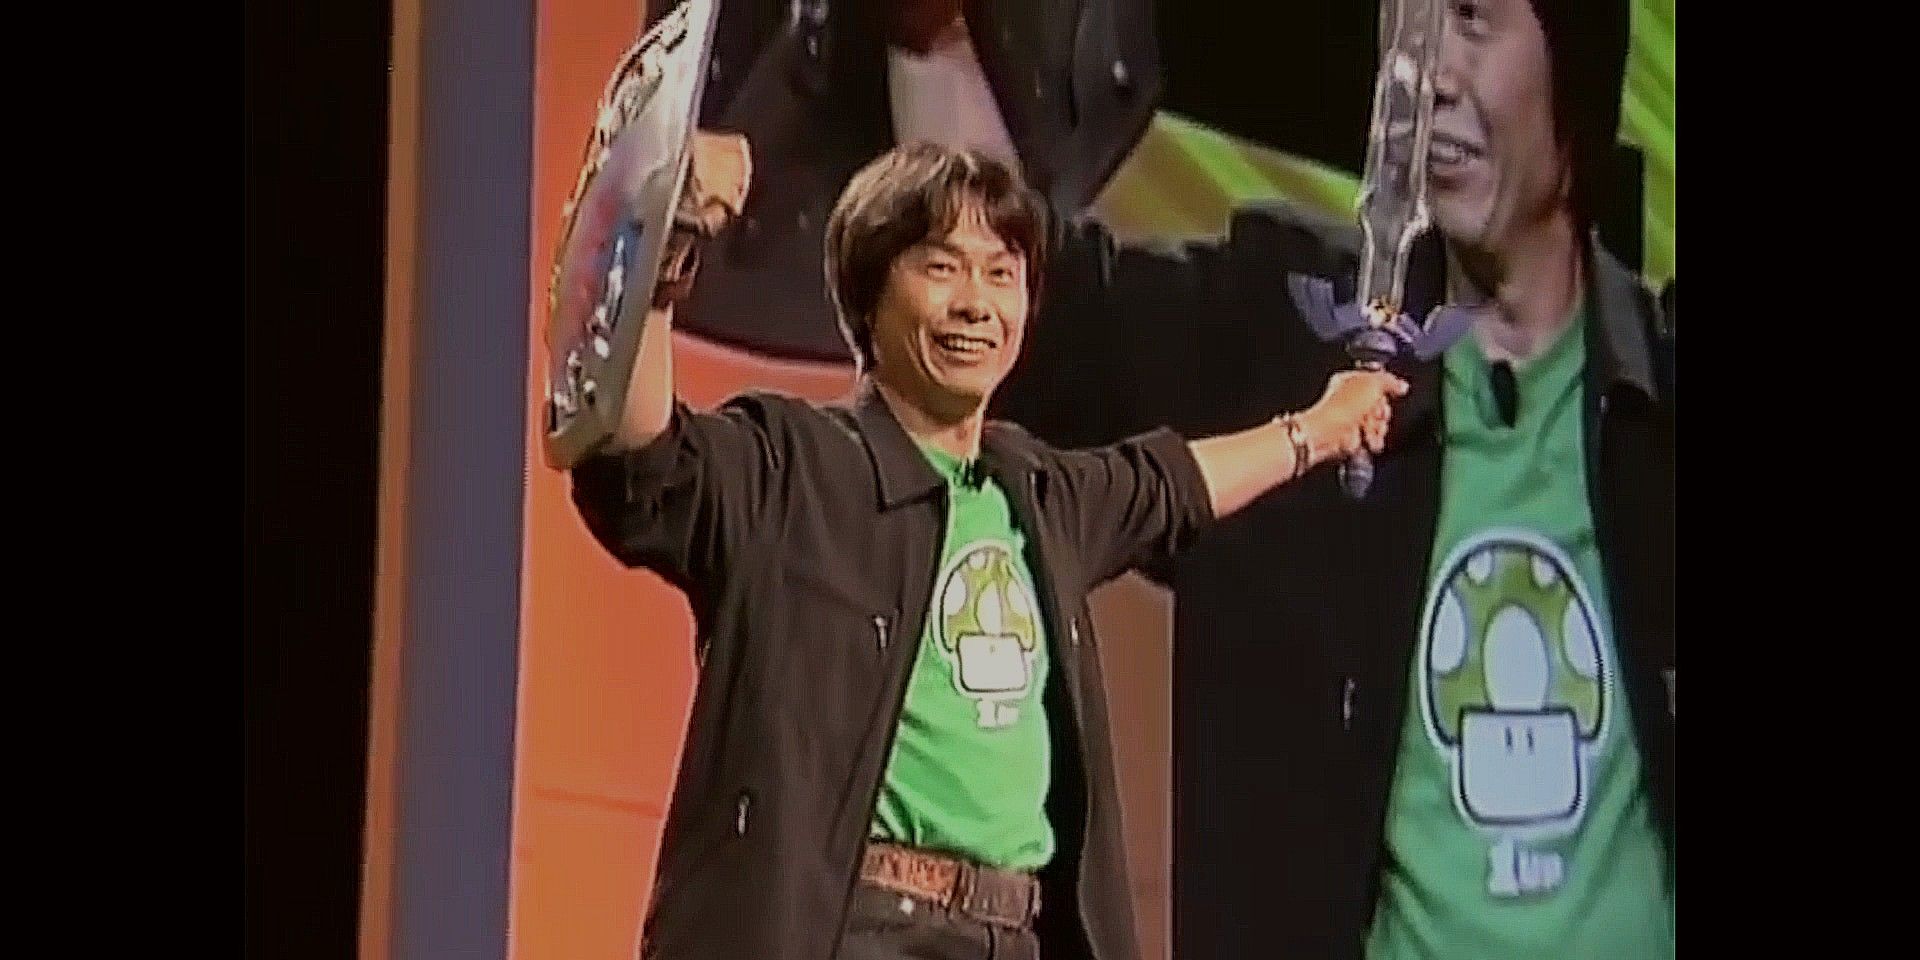 Shigeru Miyamoto E3 2004 hands in air